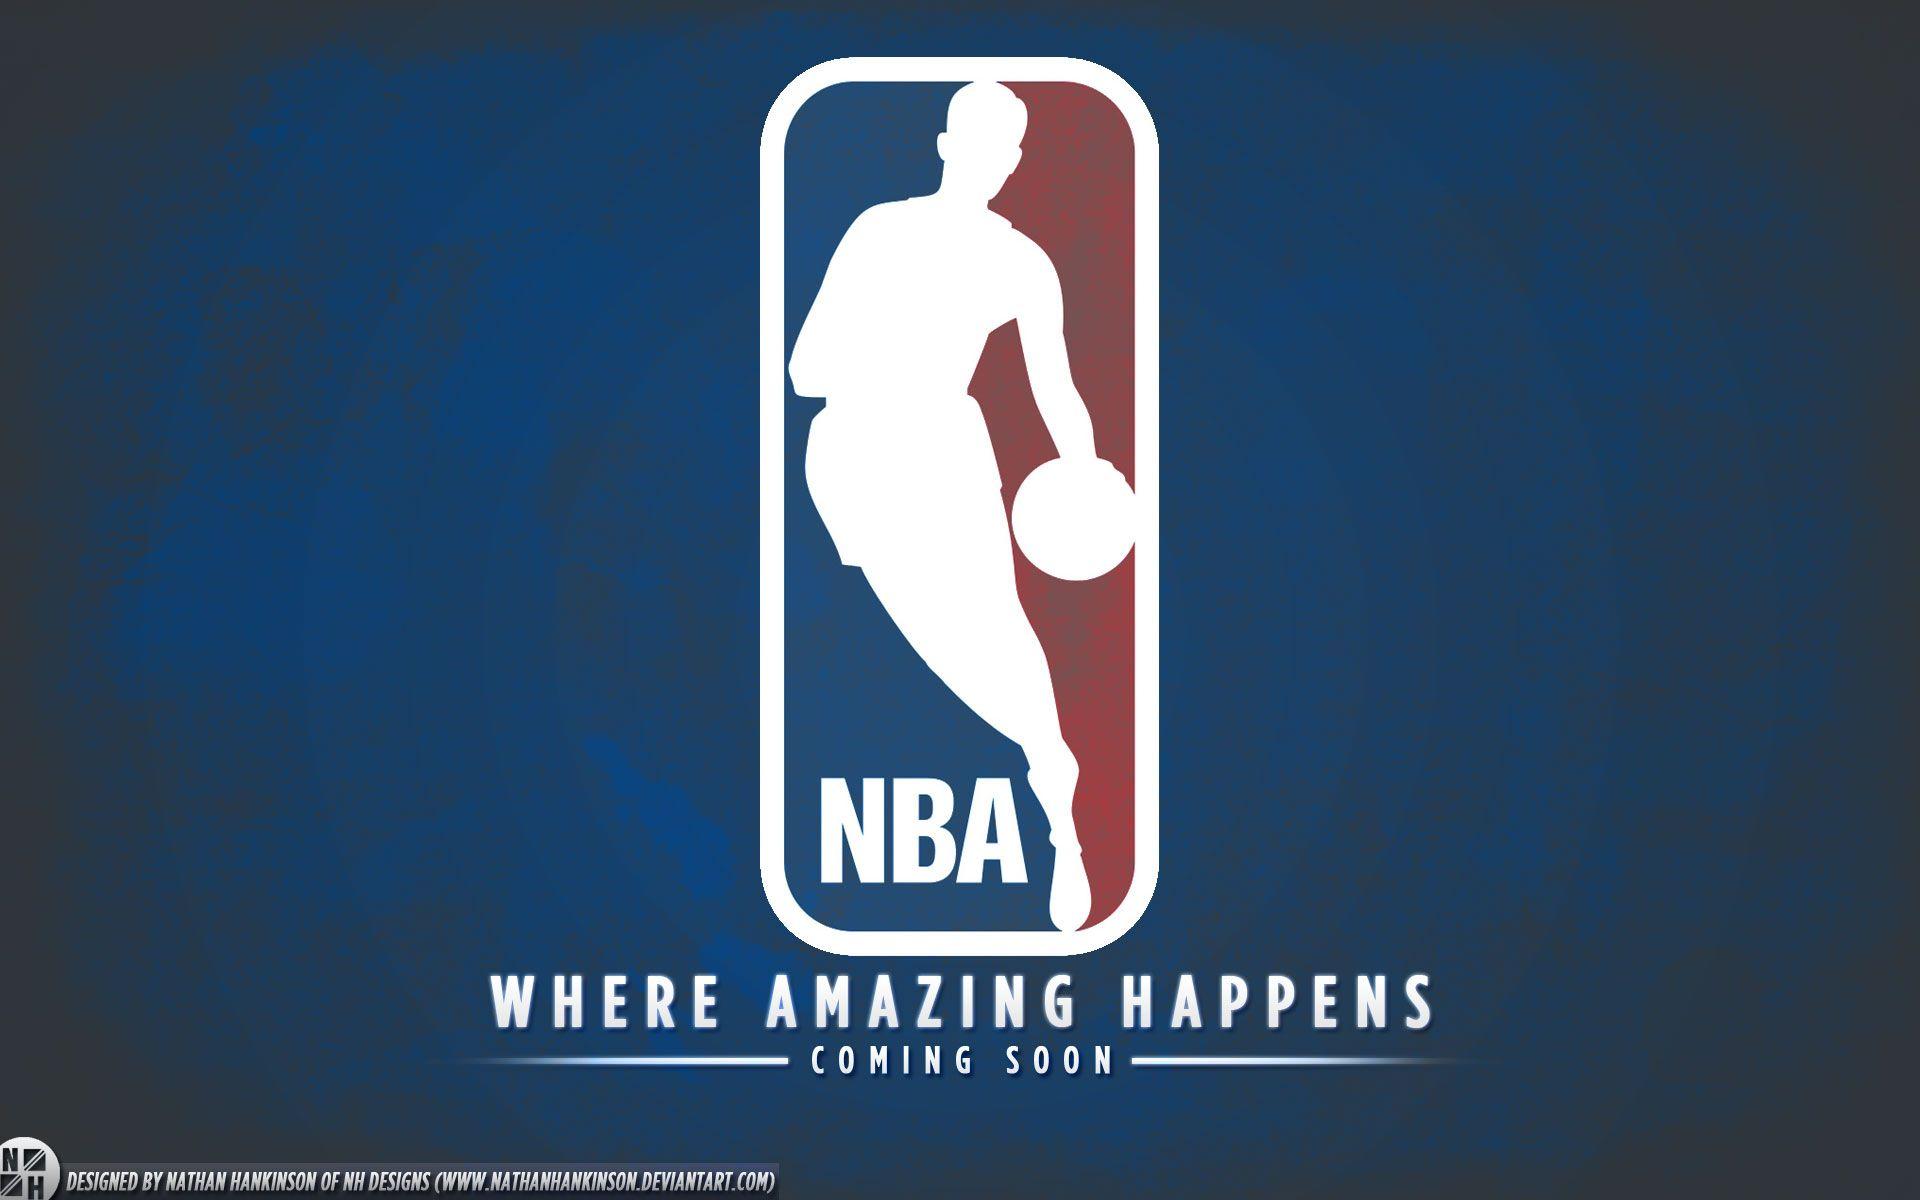 NBA 2013 Coming Soon 1920×1200 Wallpaper. Basketball Wallpaper